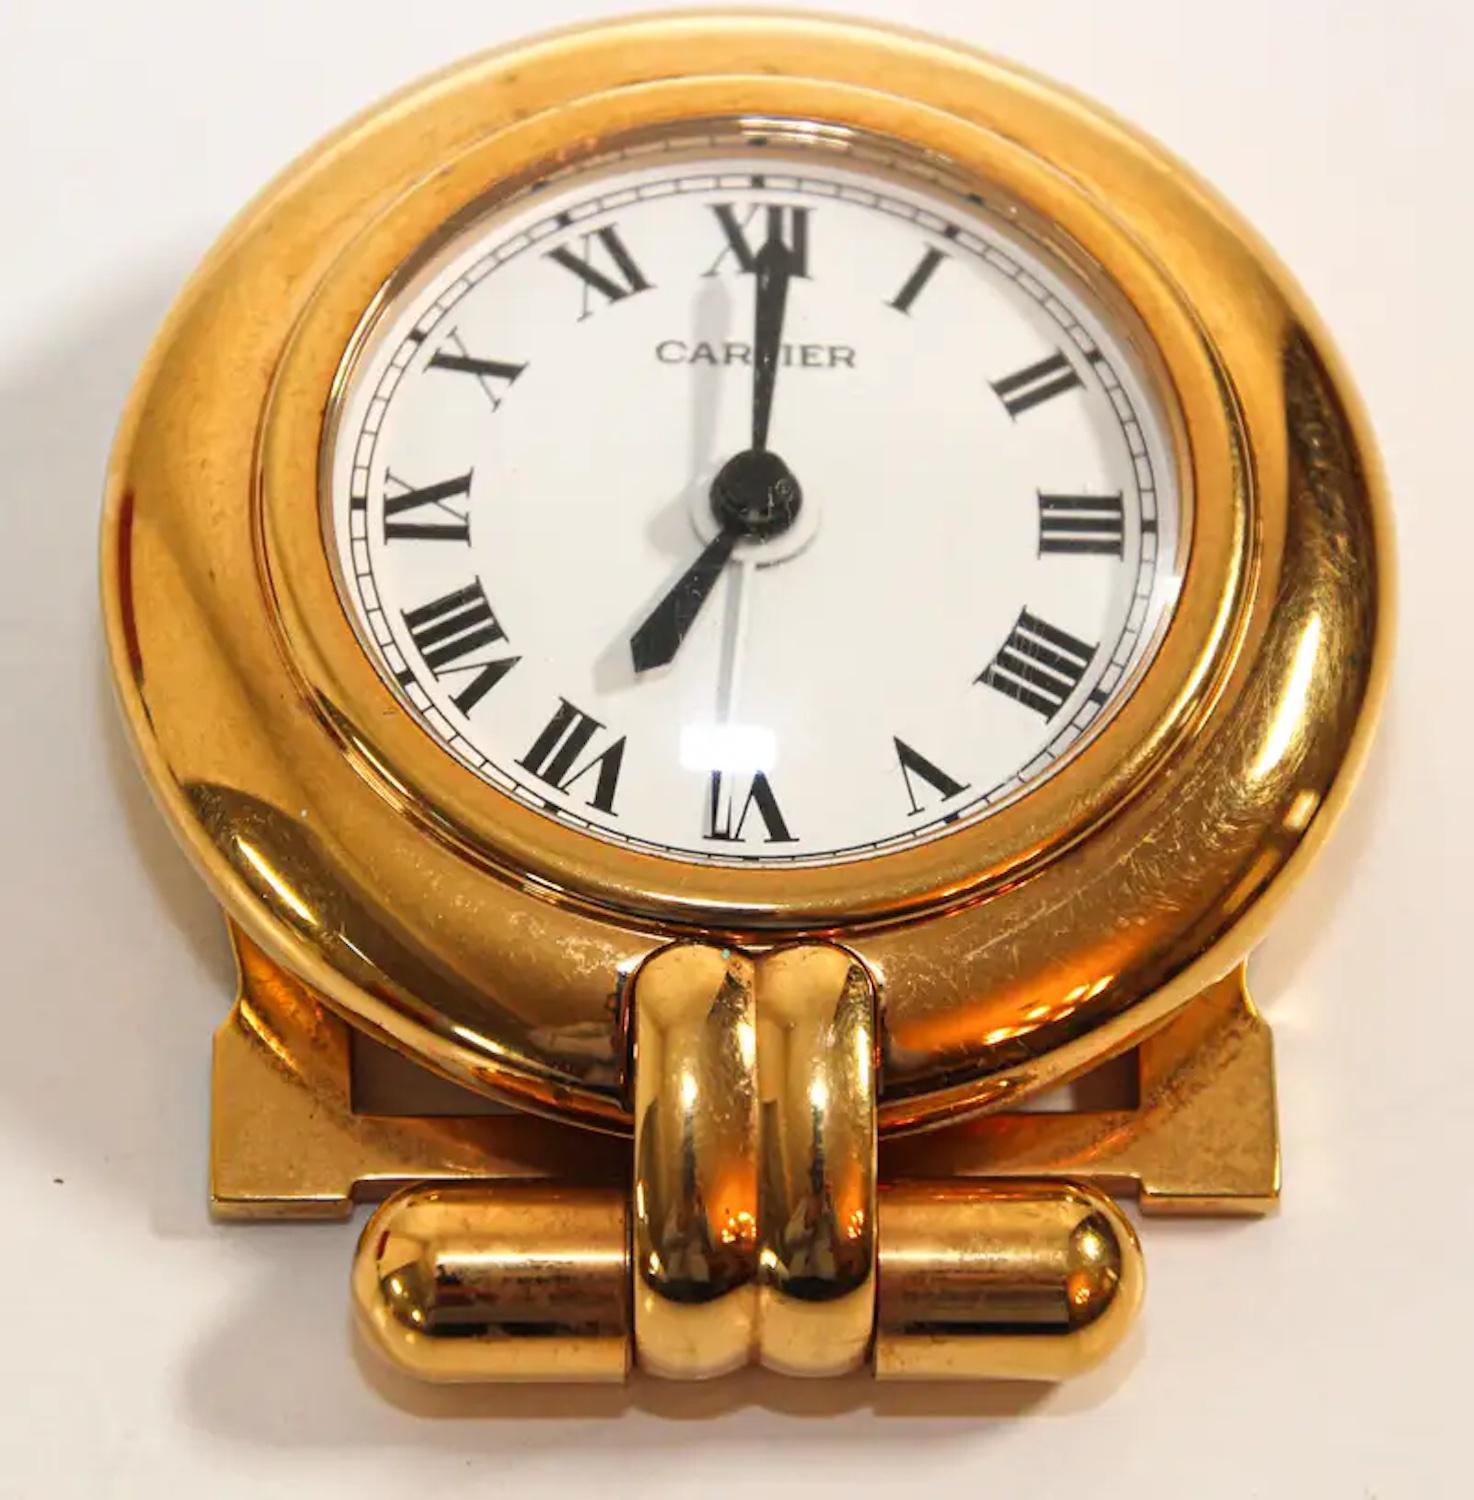 Cartier Colisee Art Deco Travel Desk Clock 24-Karat Gold-Plated 7